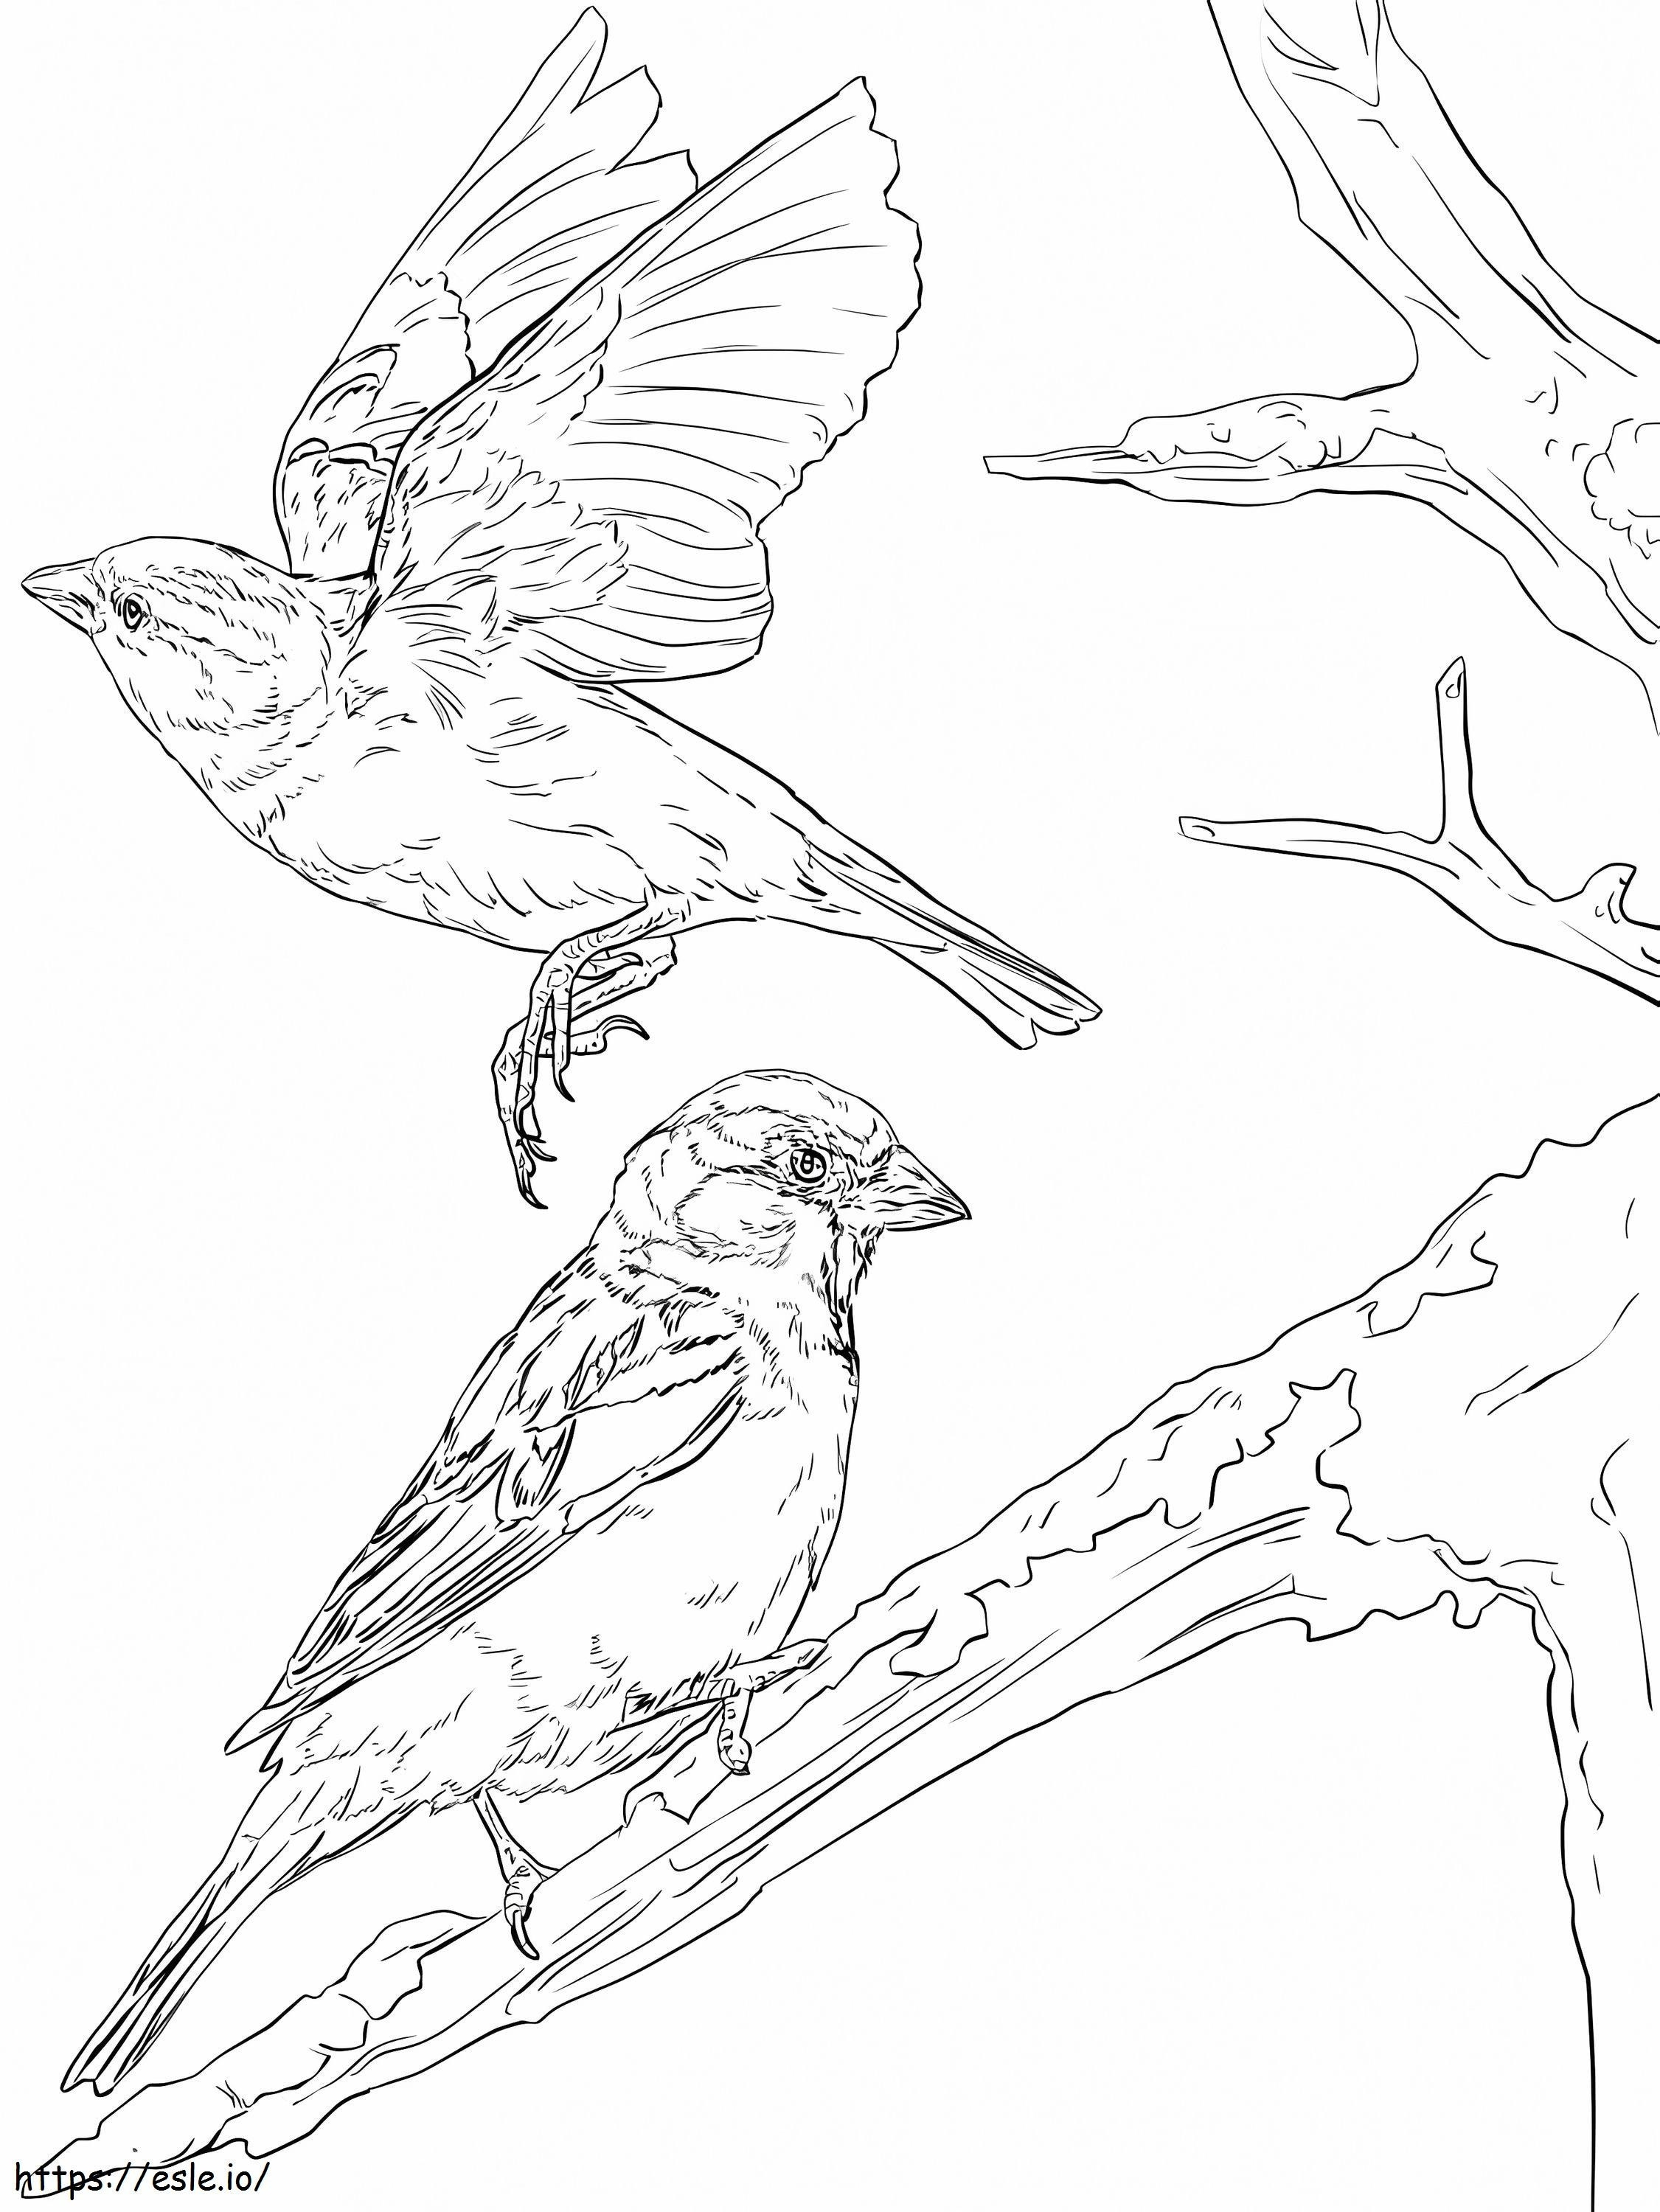 English Sparrows coloring page